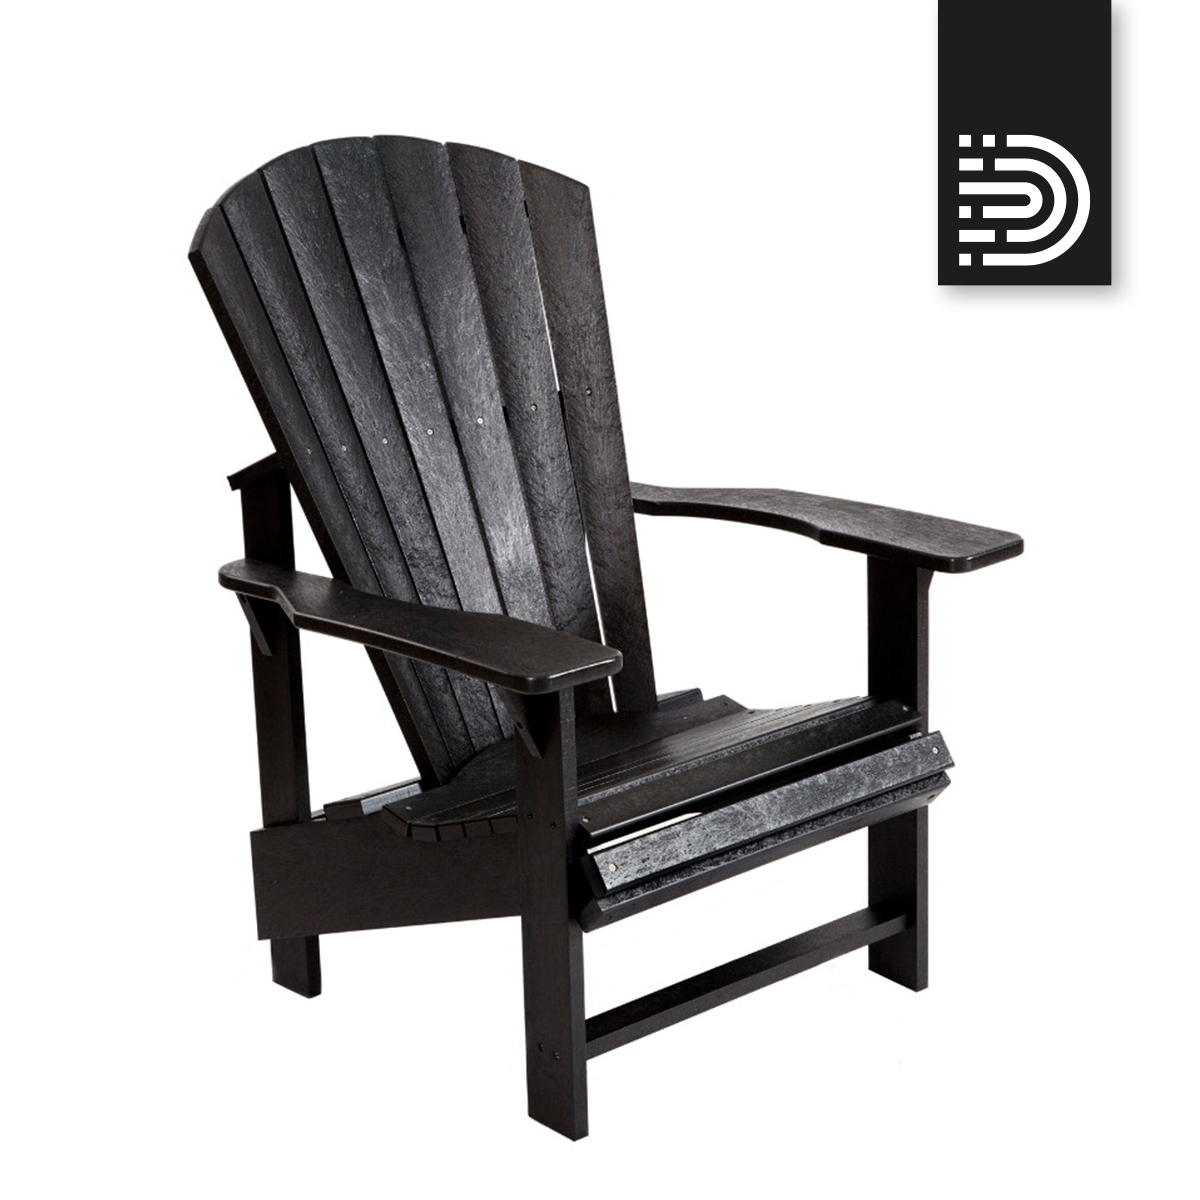 C03 Upright Adirondack Chair - black 14